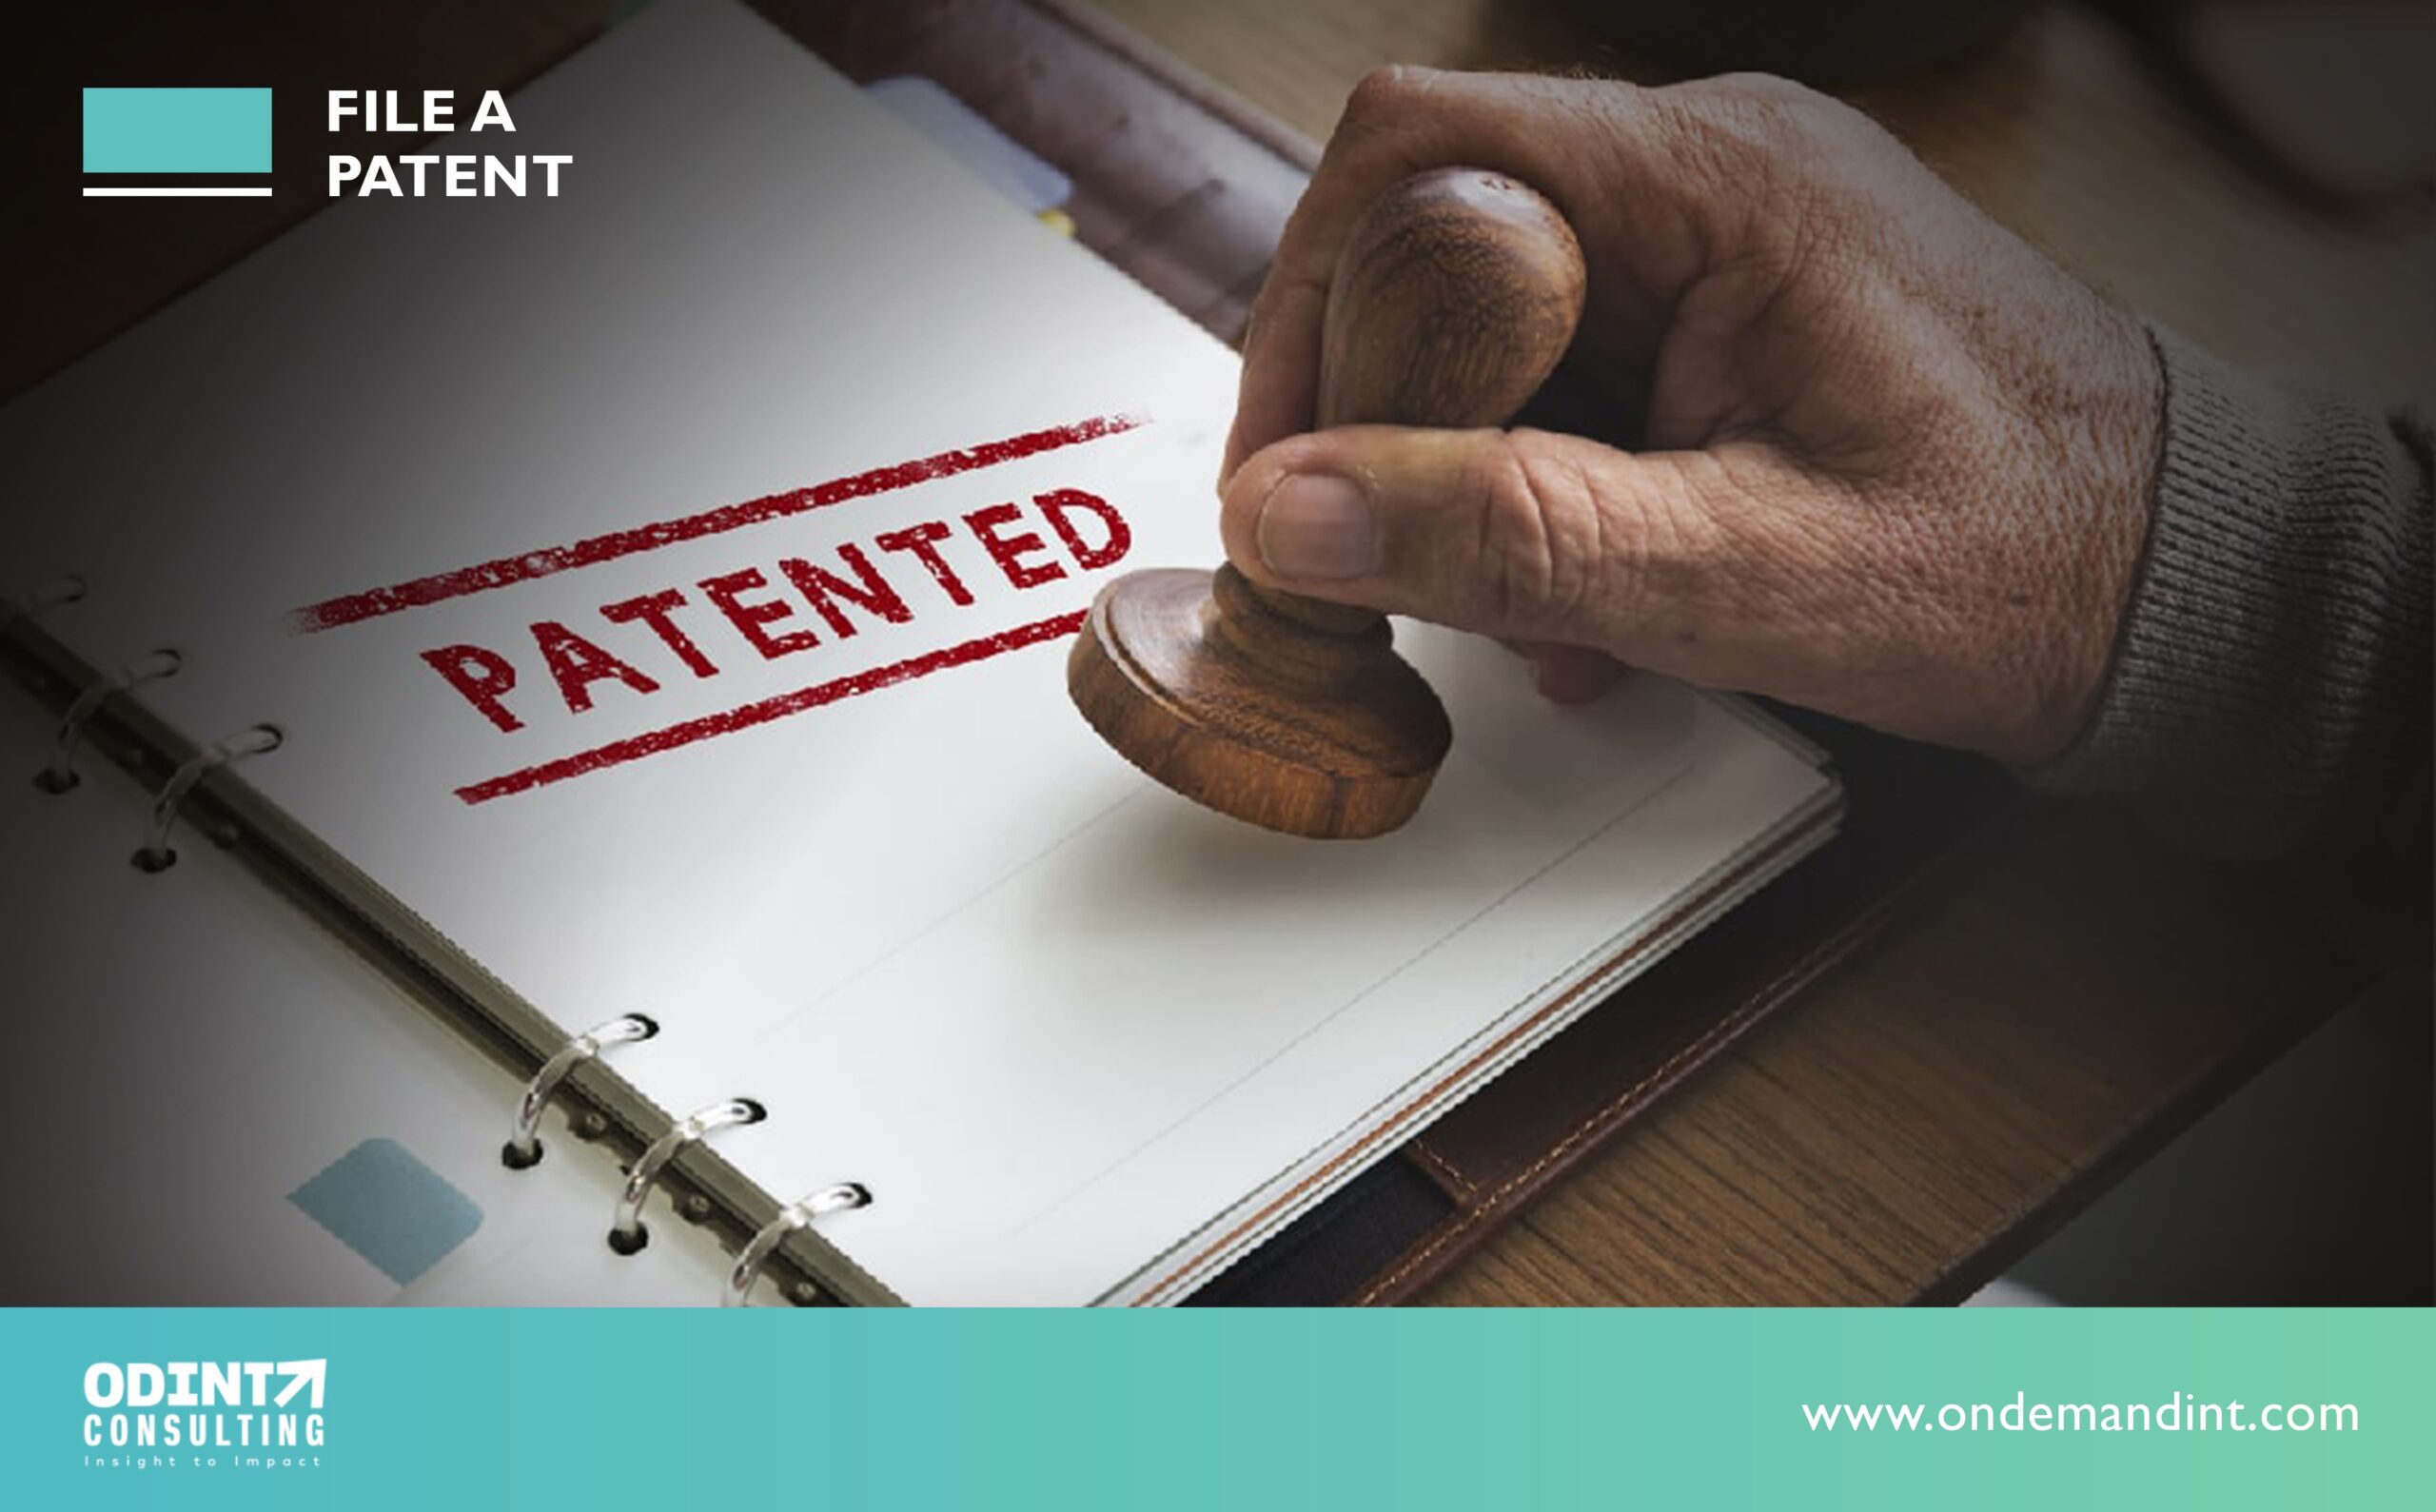 File a Patent in 12 Steps: Procedure & Deadline